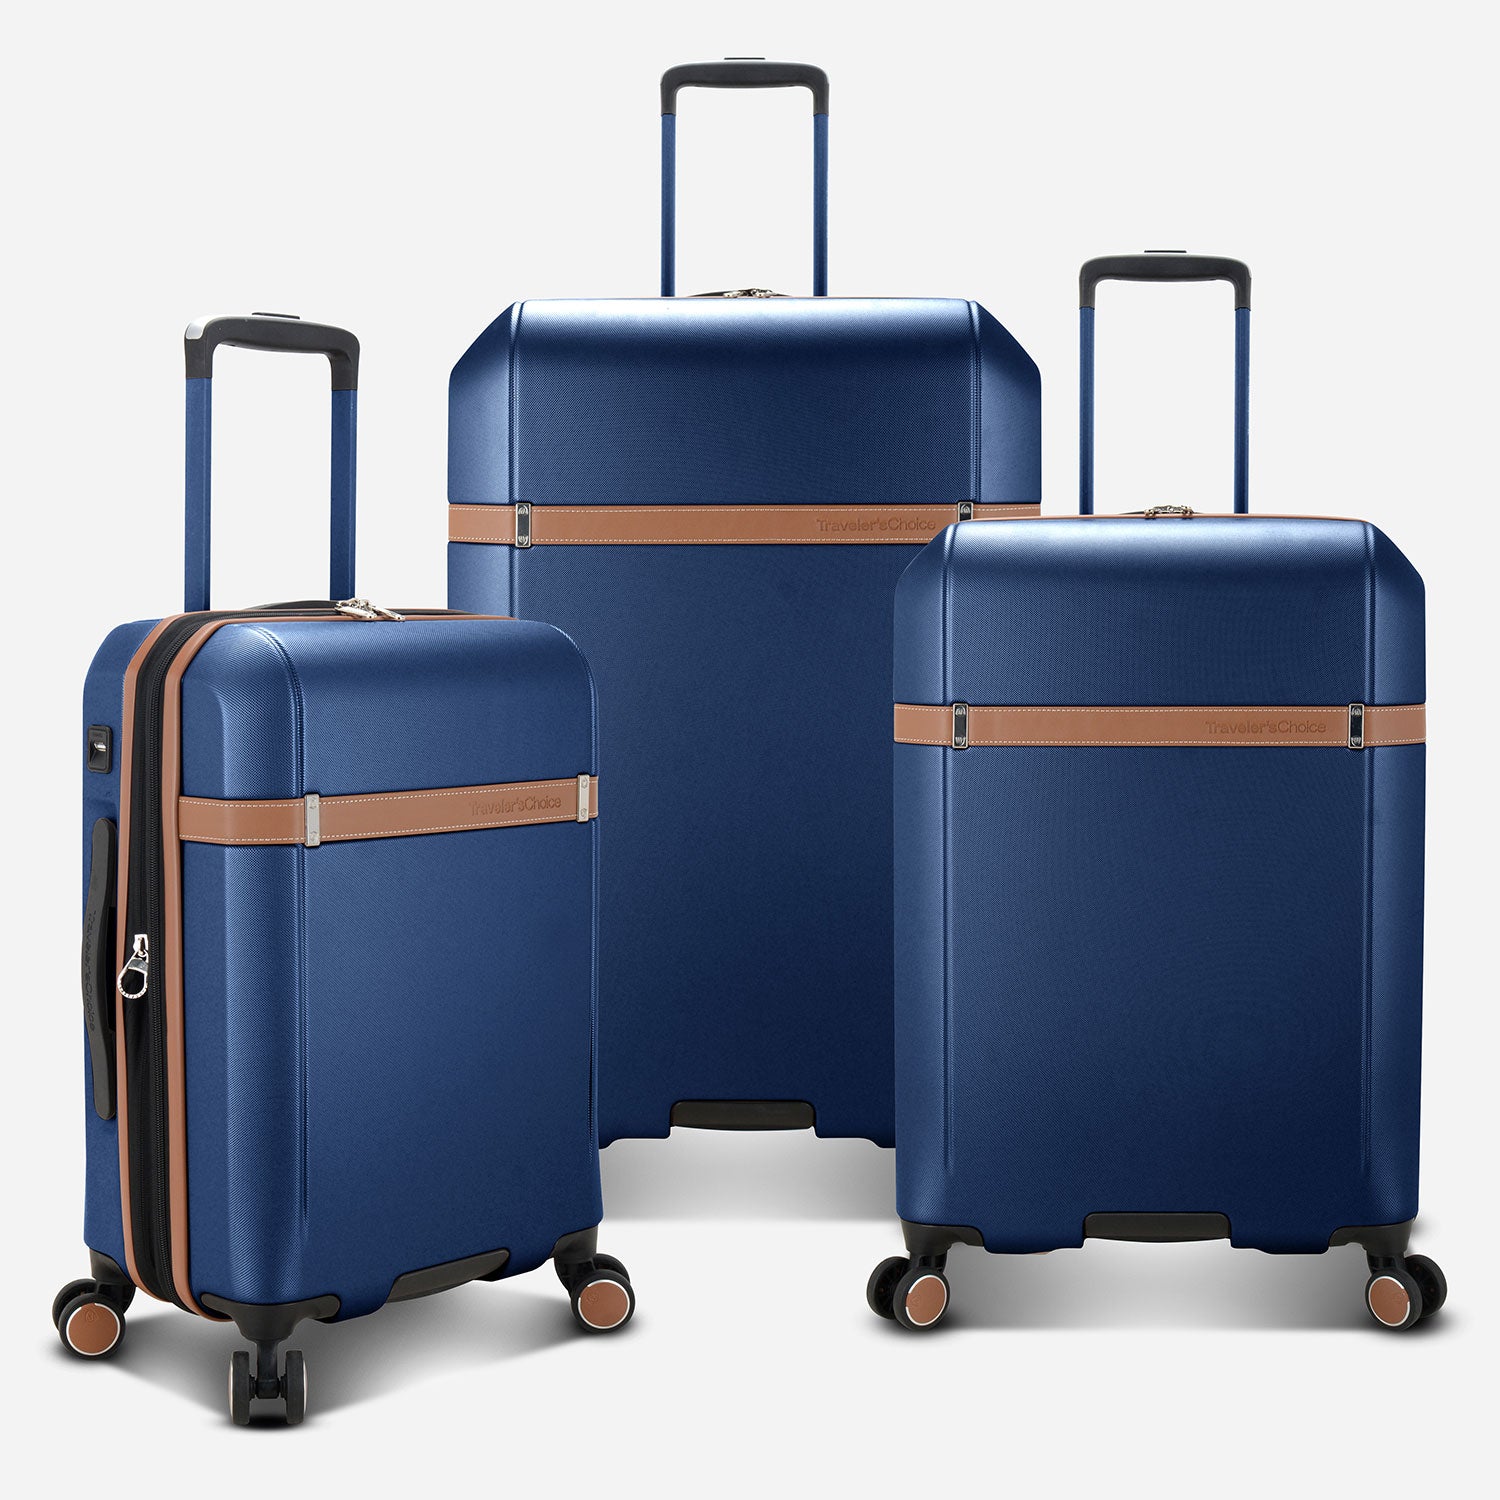 LONG VACATION Luggage Set 4 Piece Luggage Set ABS hardshell TSA Lock  Spinner Wheels Luggage Carry on Suitcase (WHITE-BROWN, 6 piece set)